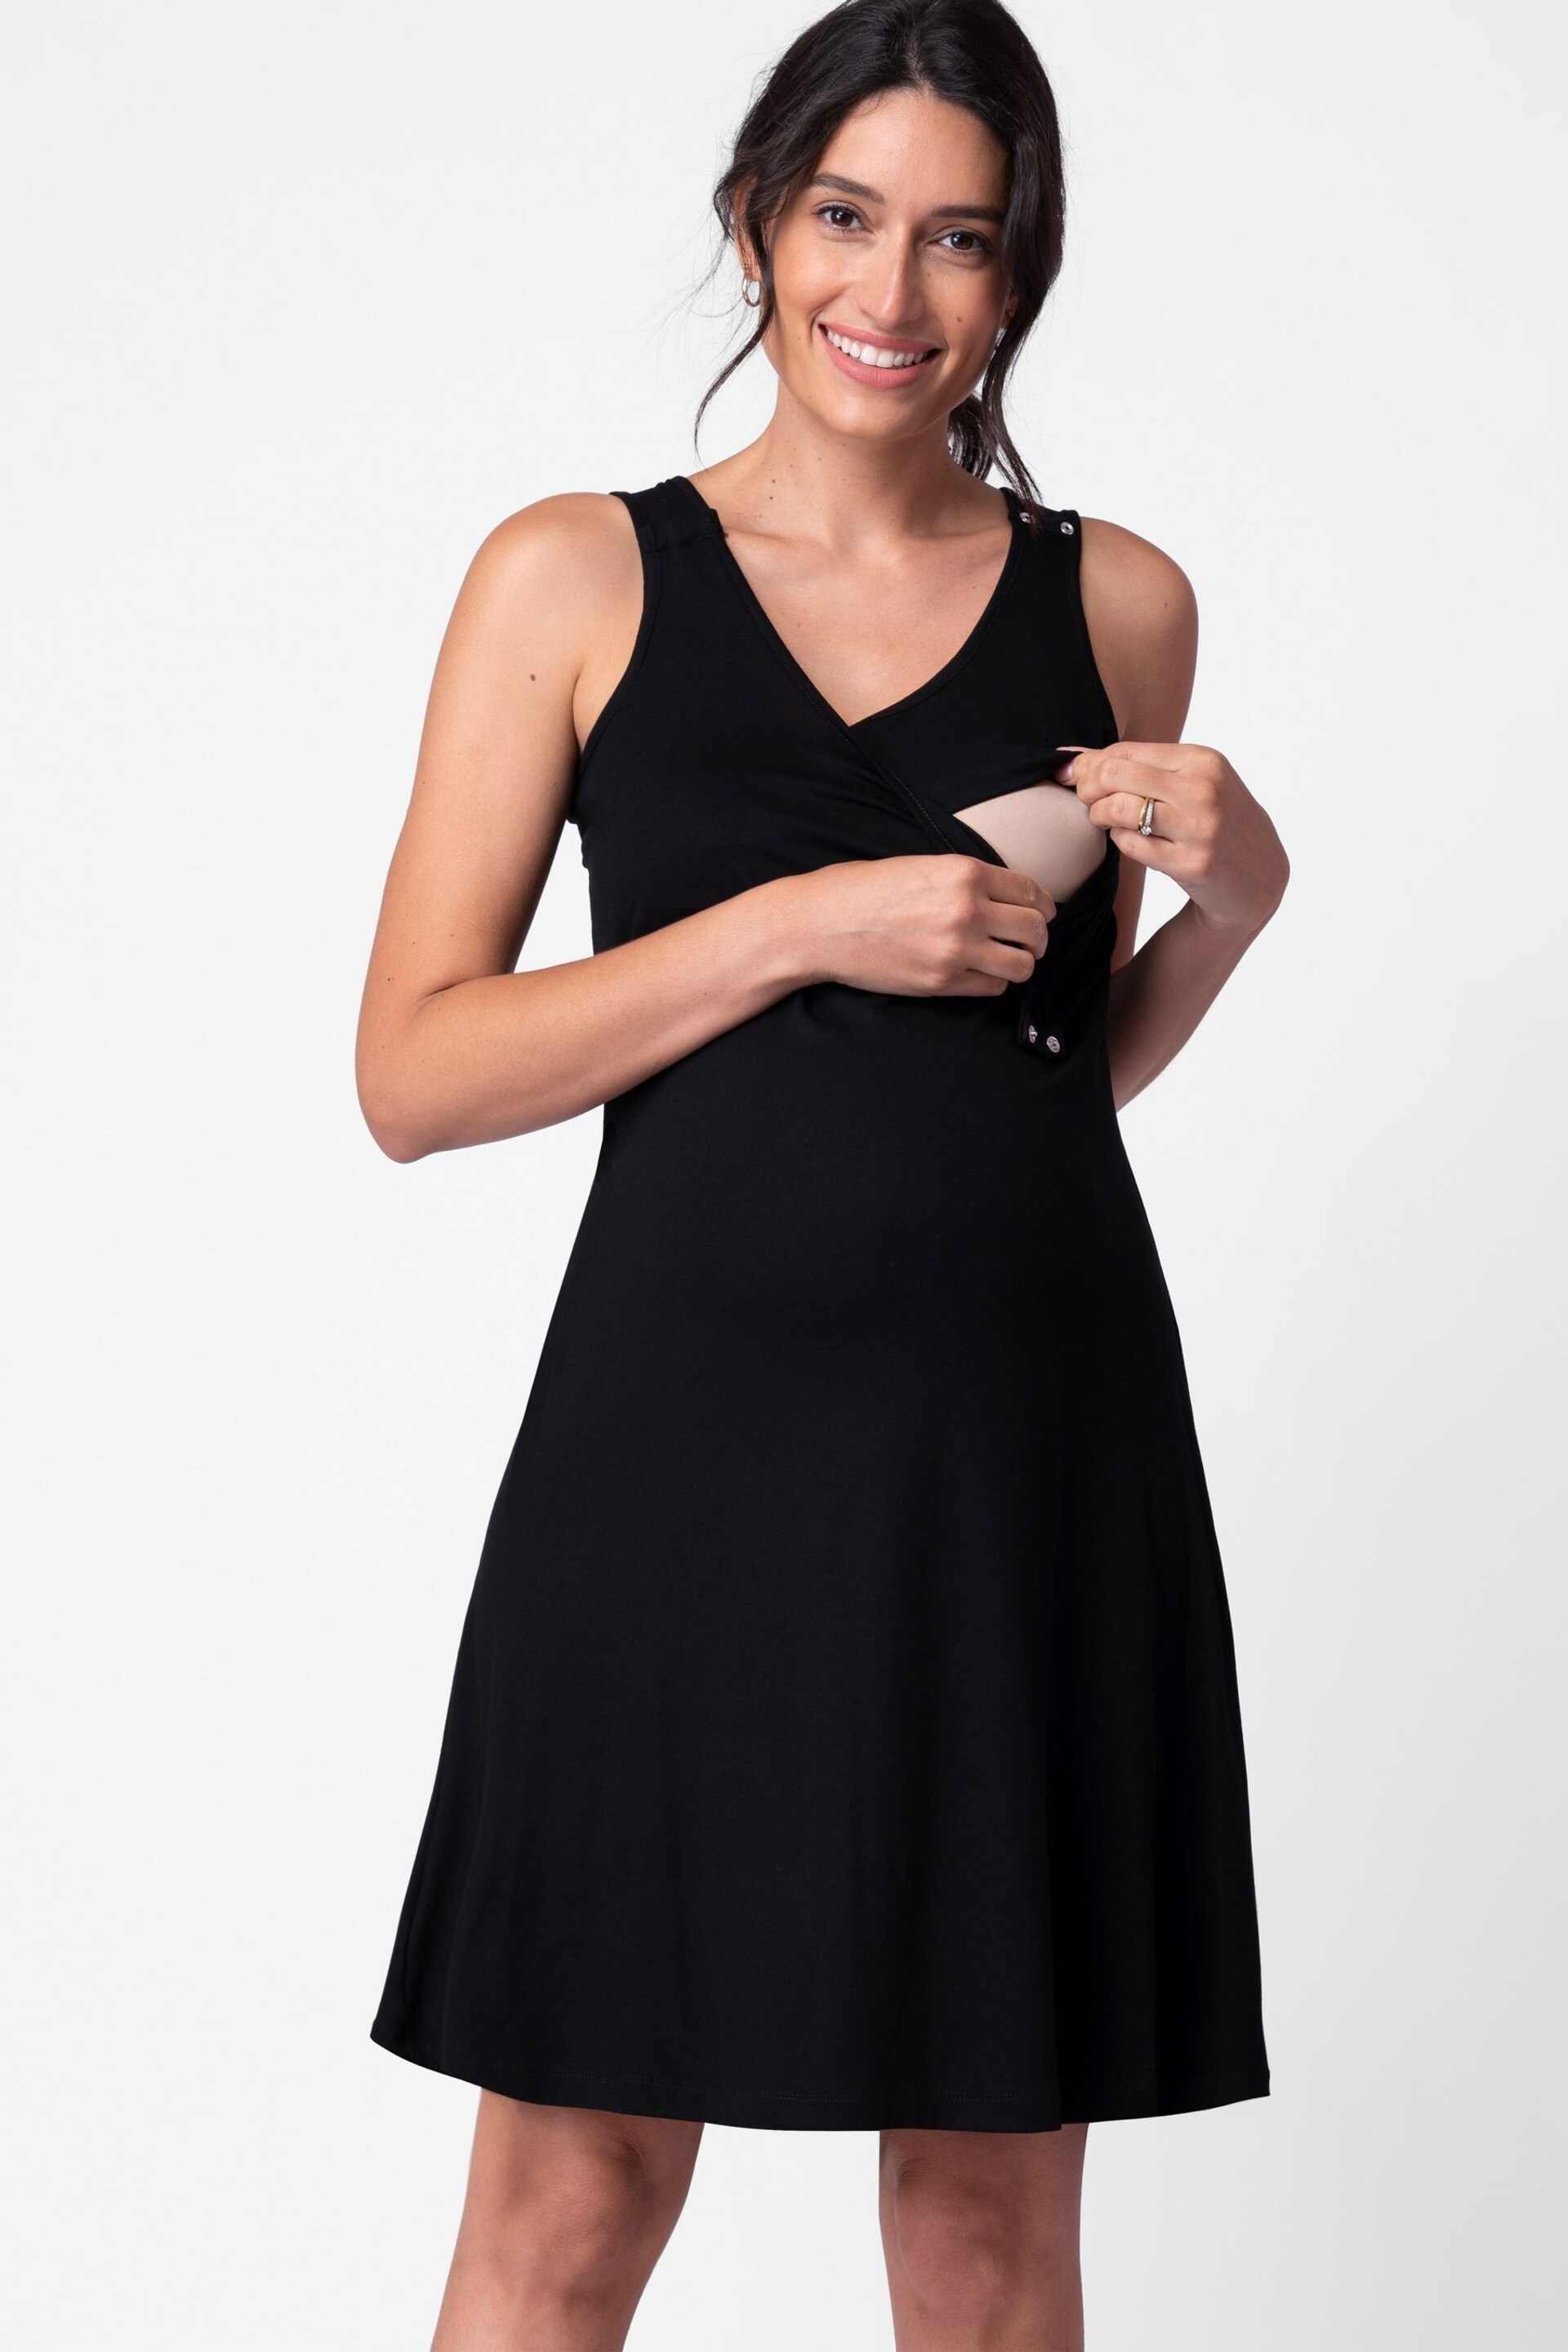 Seraphine Black Sleeveless Jersey Dress 2 Pack - Image 2 of 4